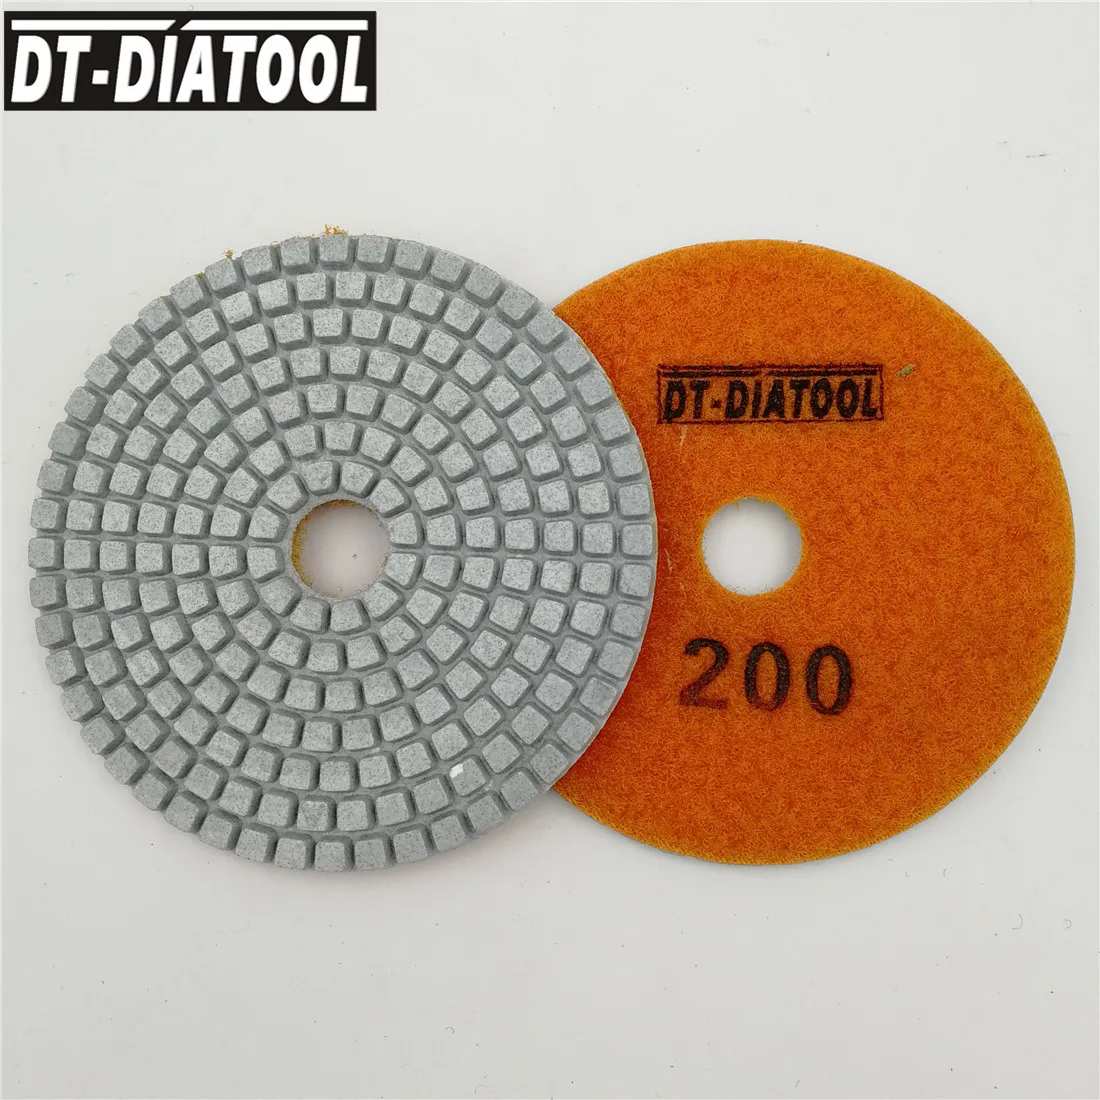 

DT-DIATOOL 10pcs Diameter 4"/100mm Diamond Wet Polishing Pads #200 White Resin Bond Natural Stone Granite Marble Sanding Discs